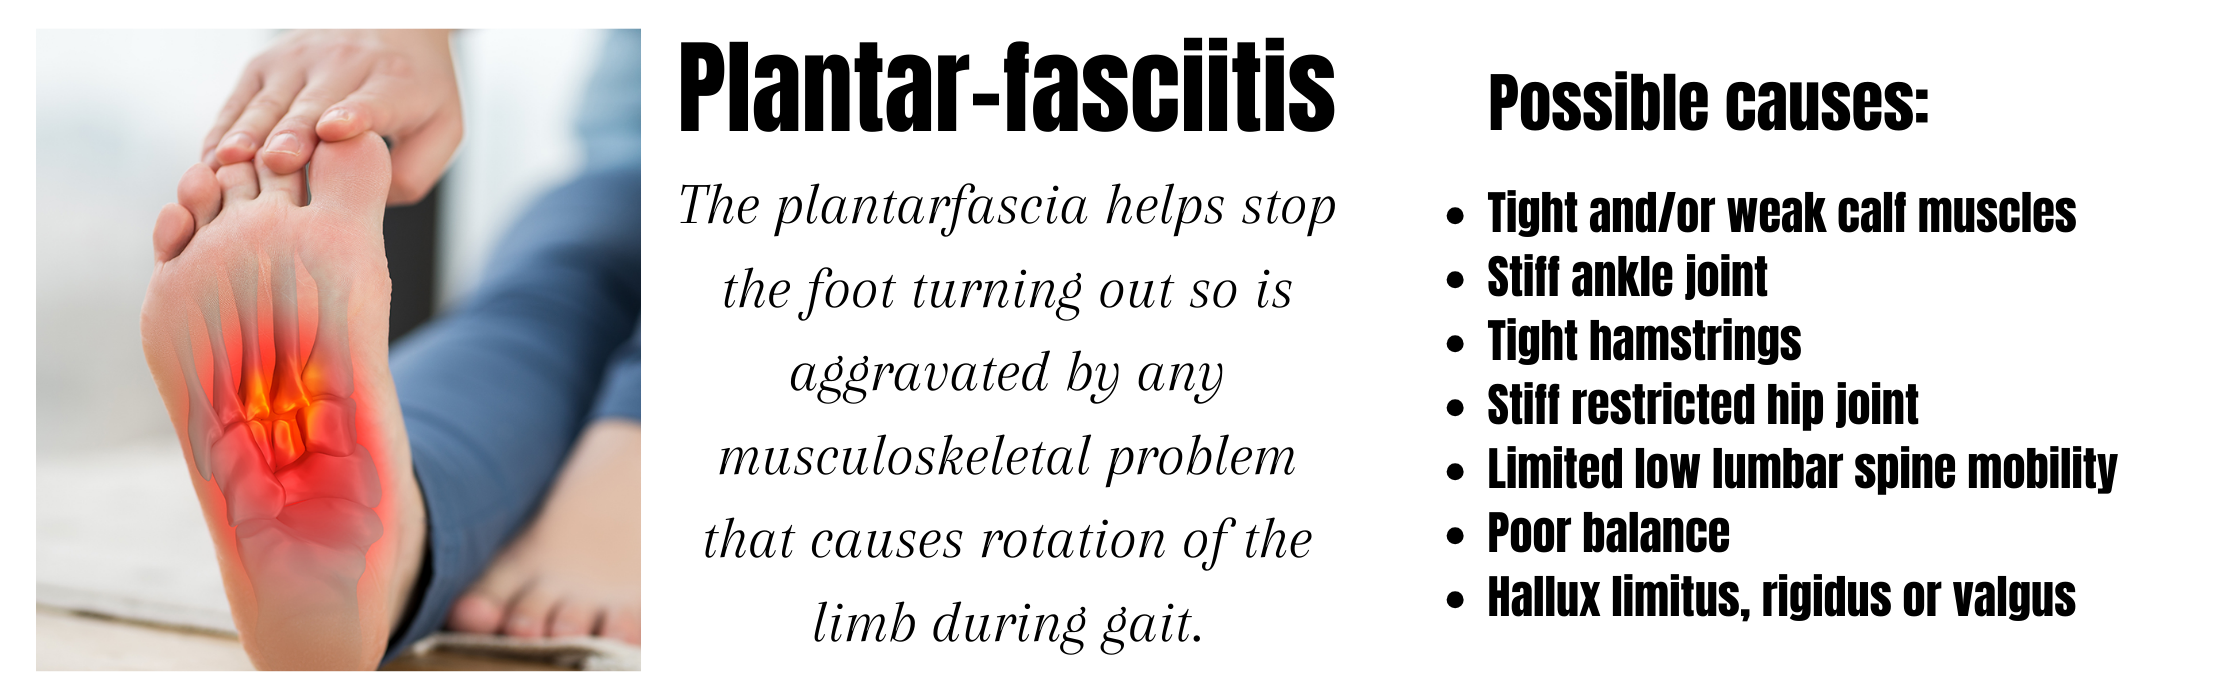 Plantar fasciitis possible causes